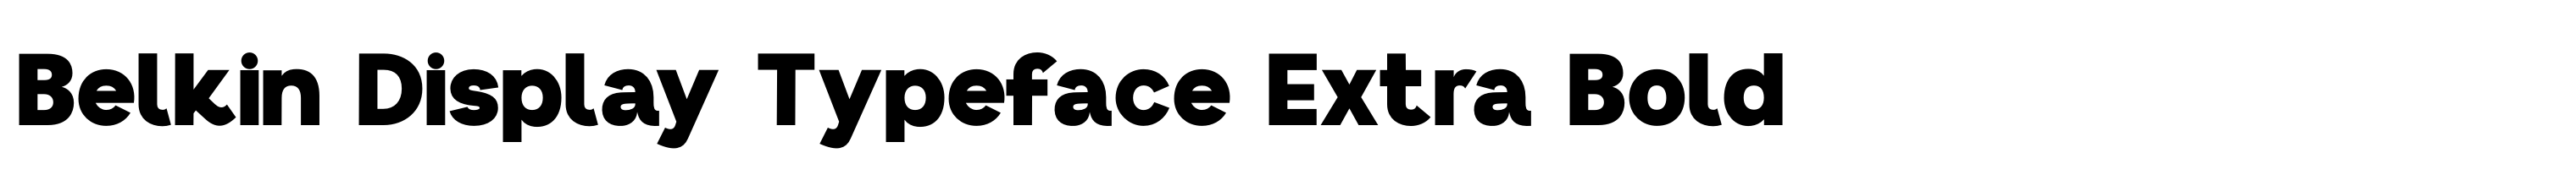 Belkin Display Typeface Extra Bold